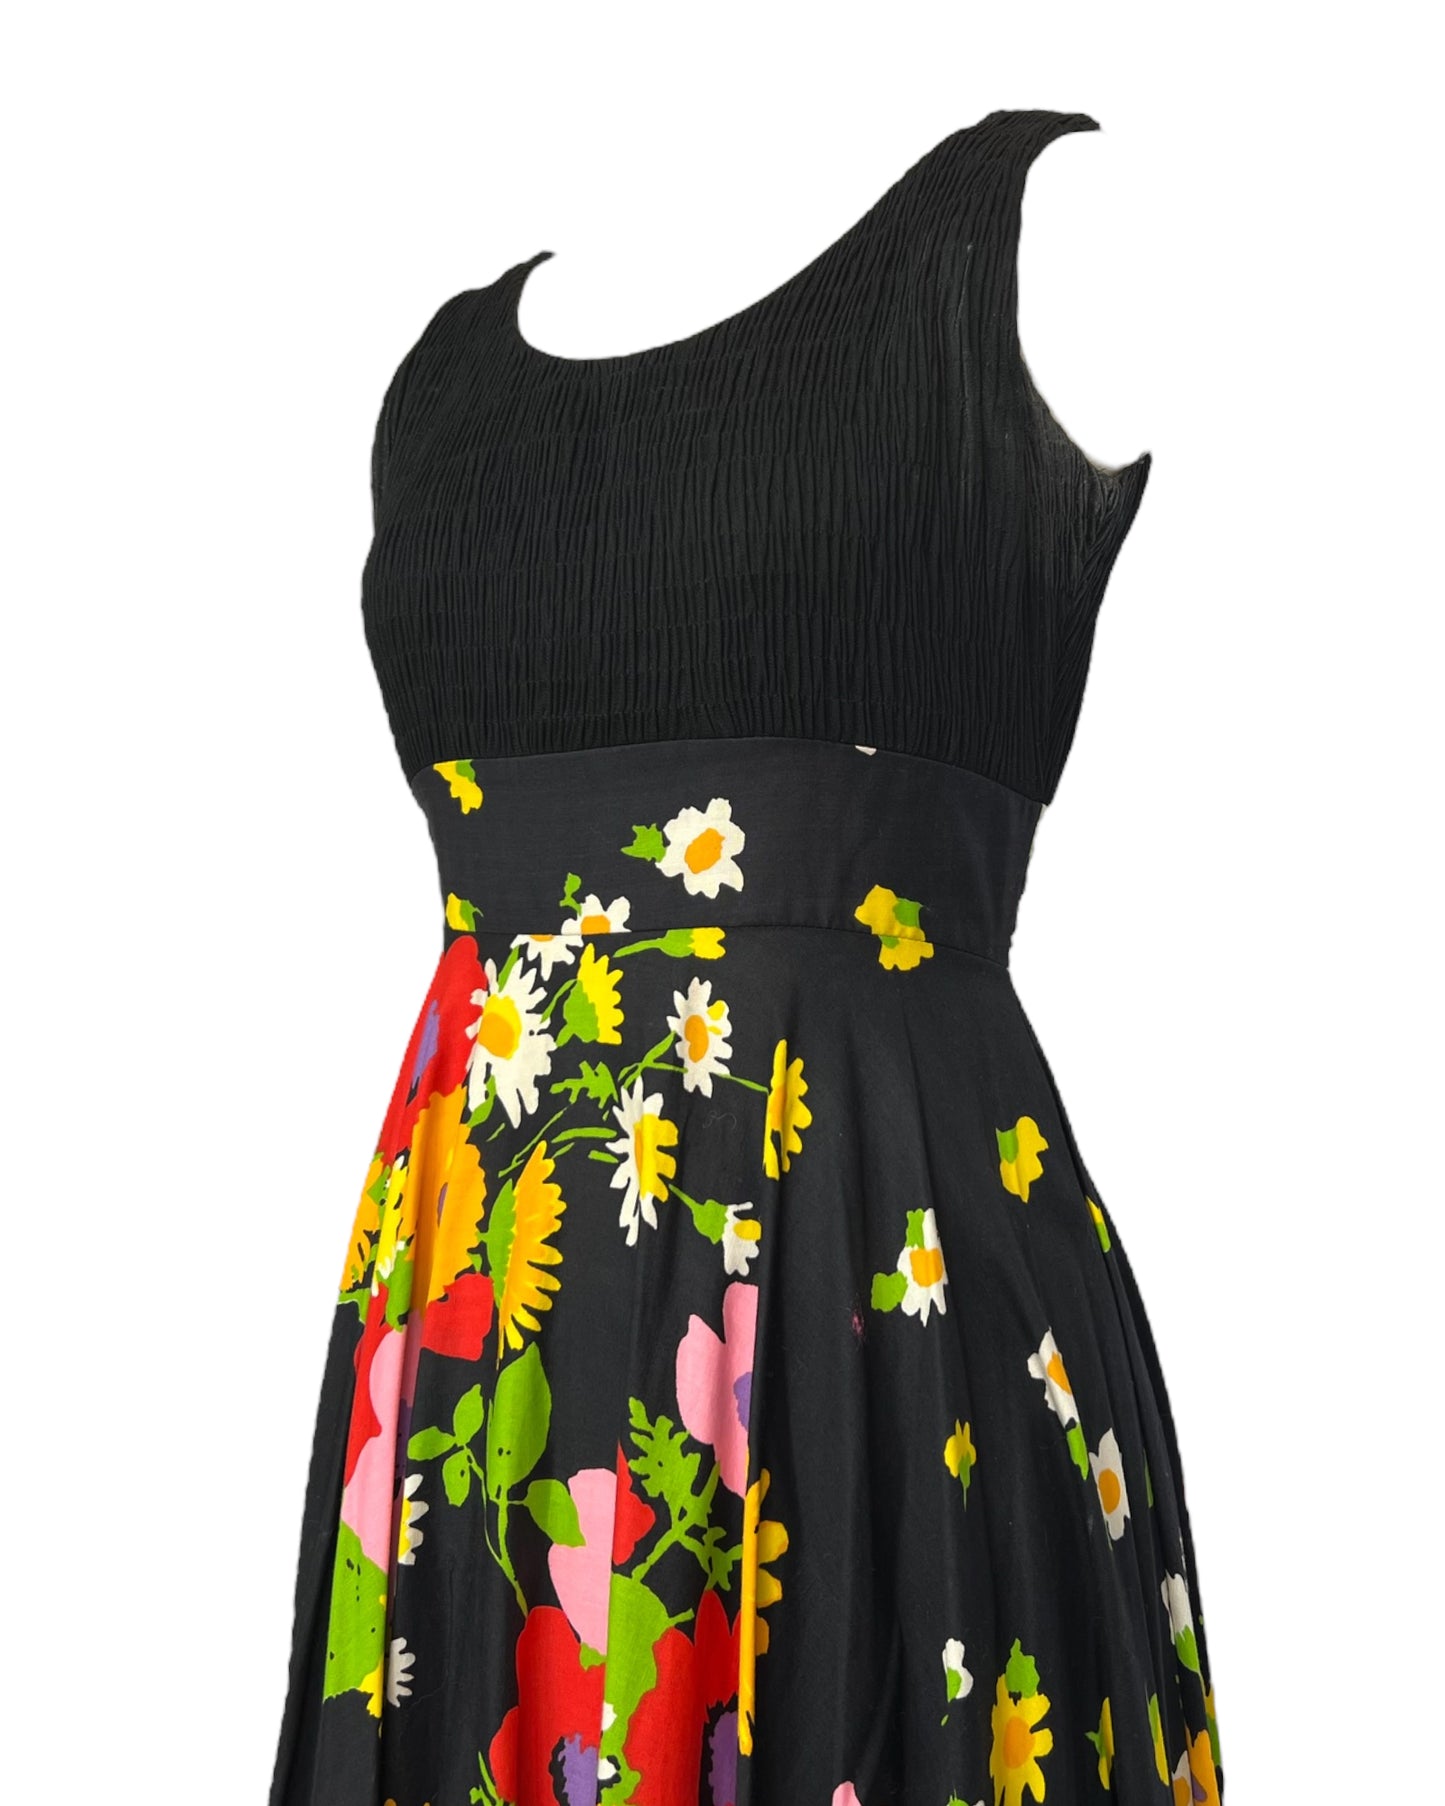 Vintage Flower Power Maxi Dress*